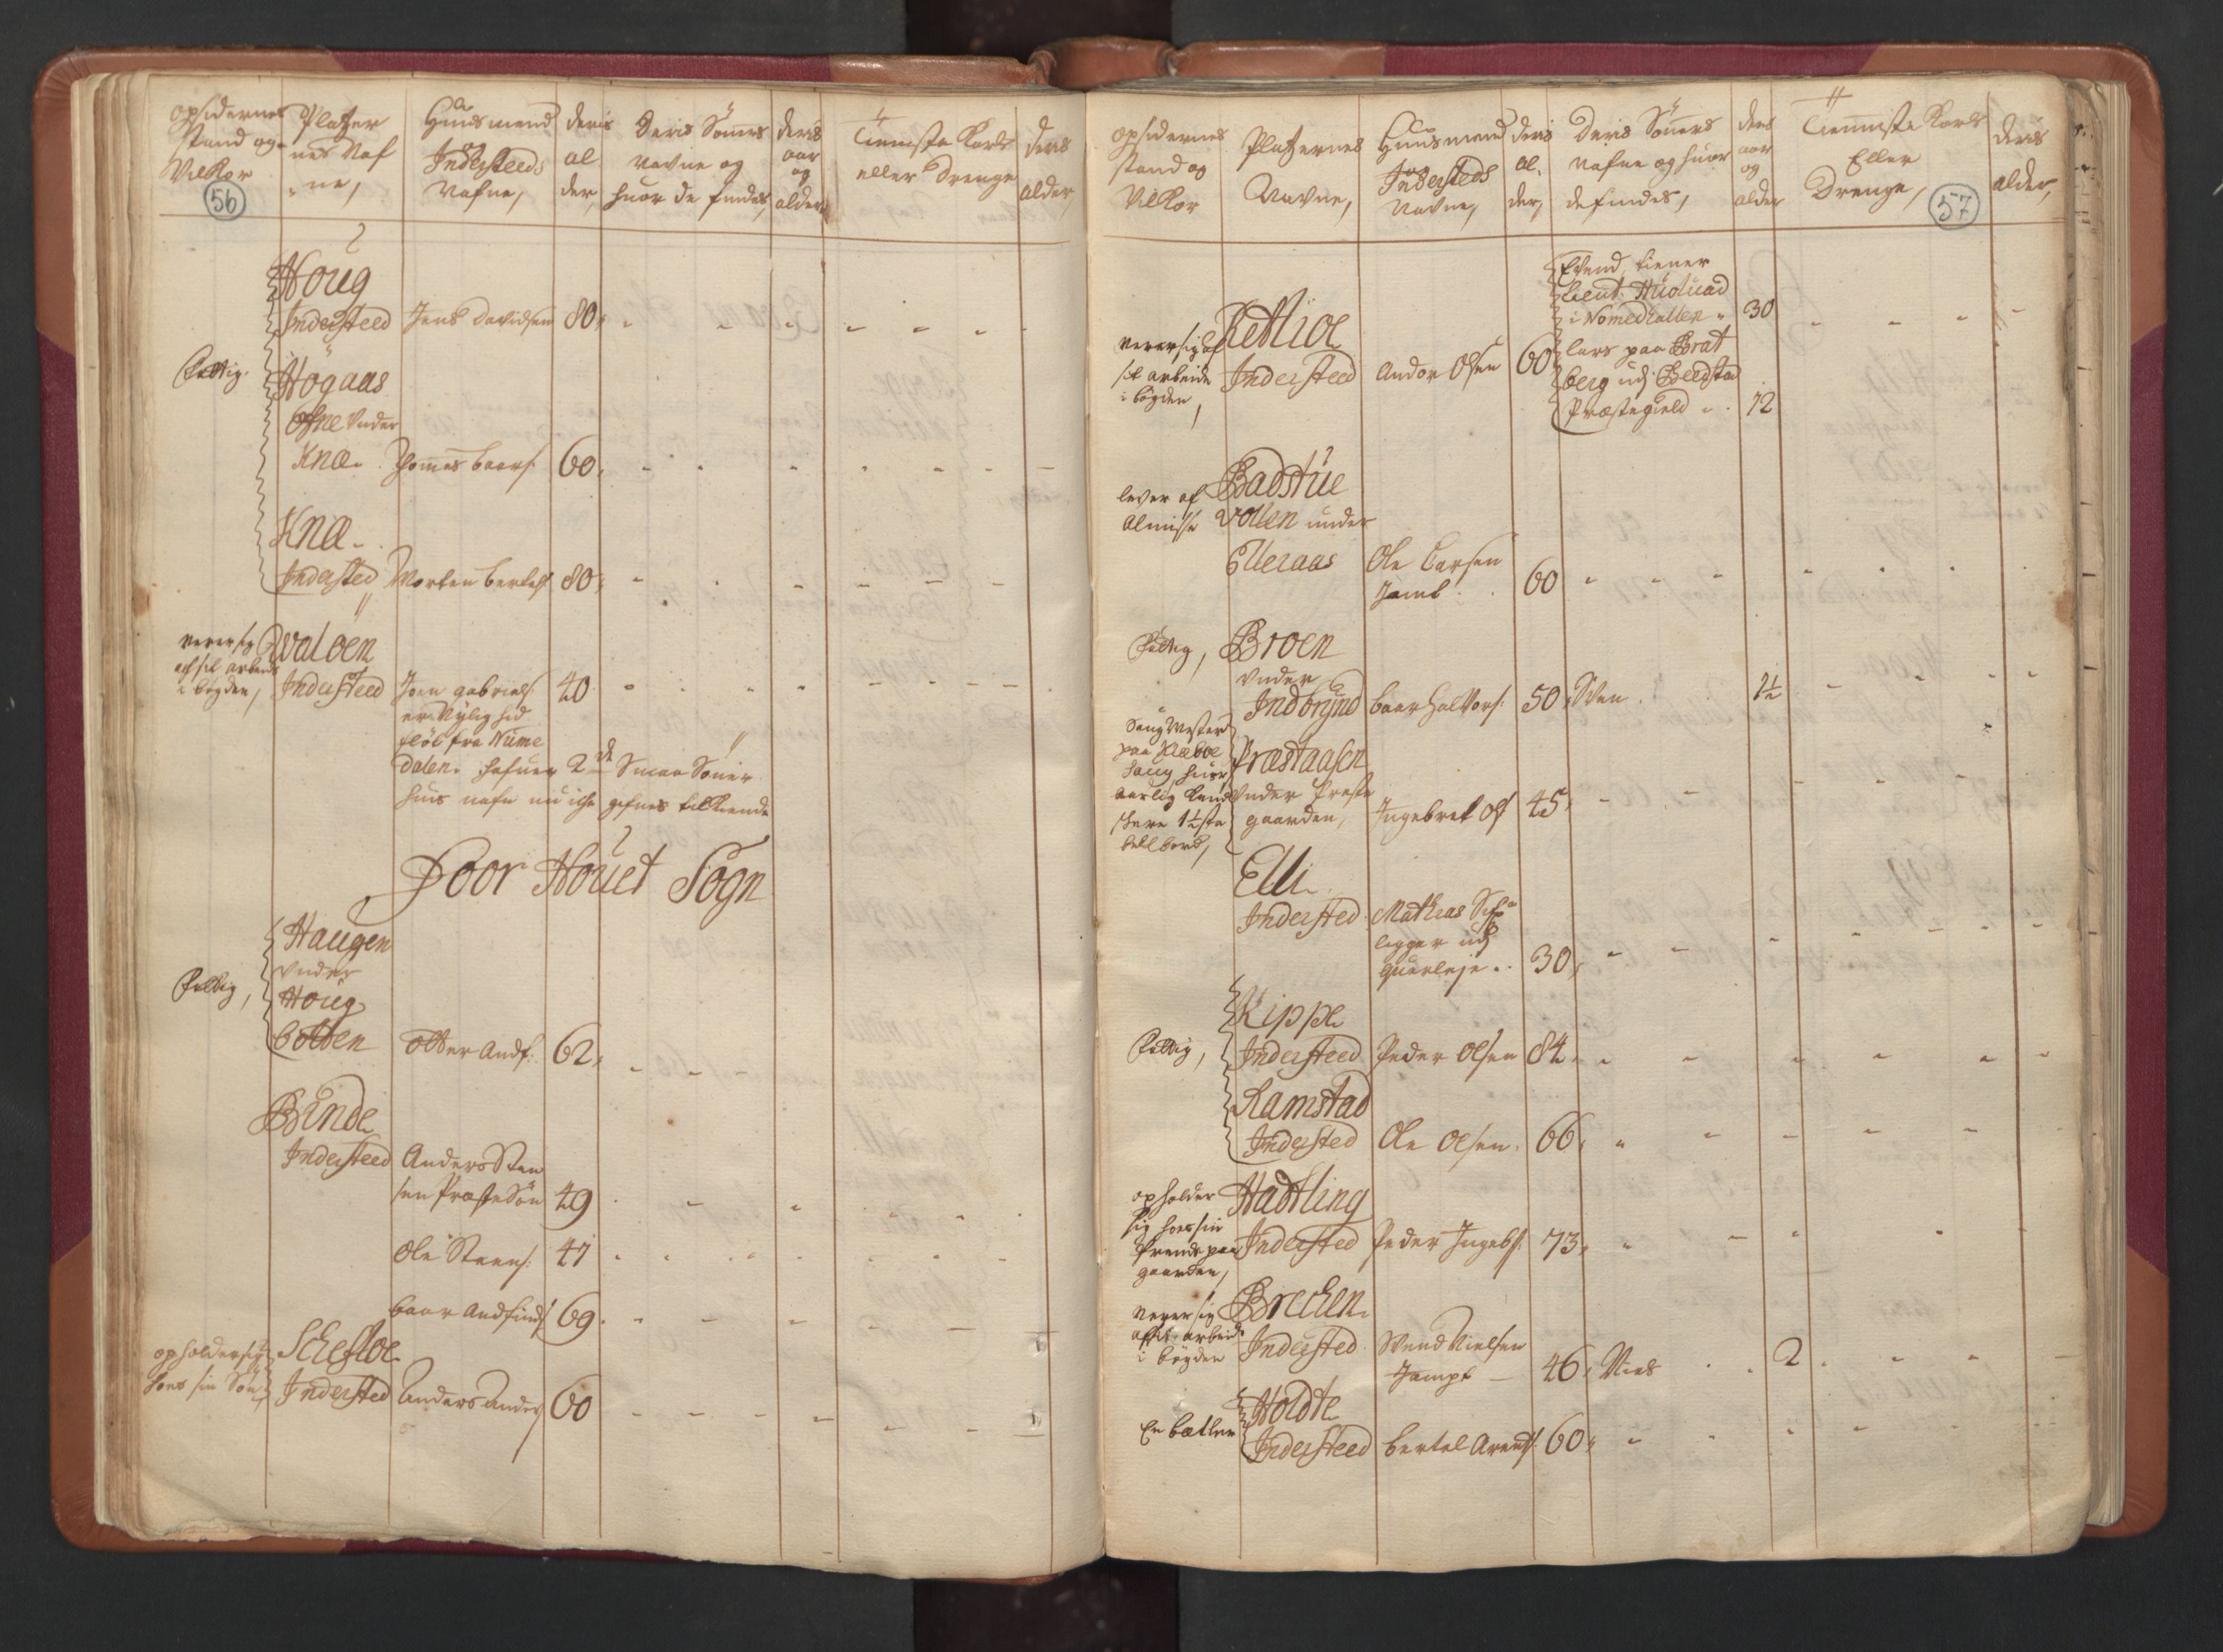 RA, Census (manntall) 1701, no. 15: Inderøy fogderi and Namdal fogderi, 1701, p. 56-57